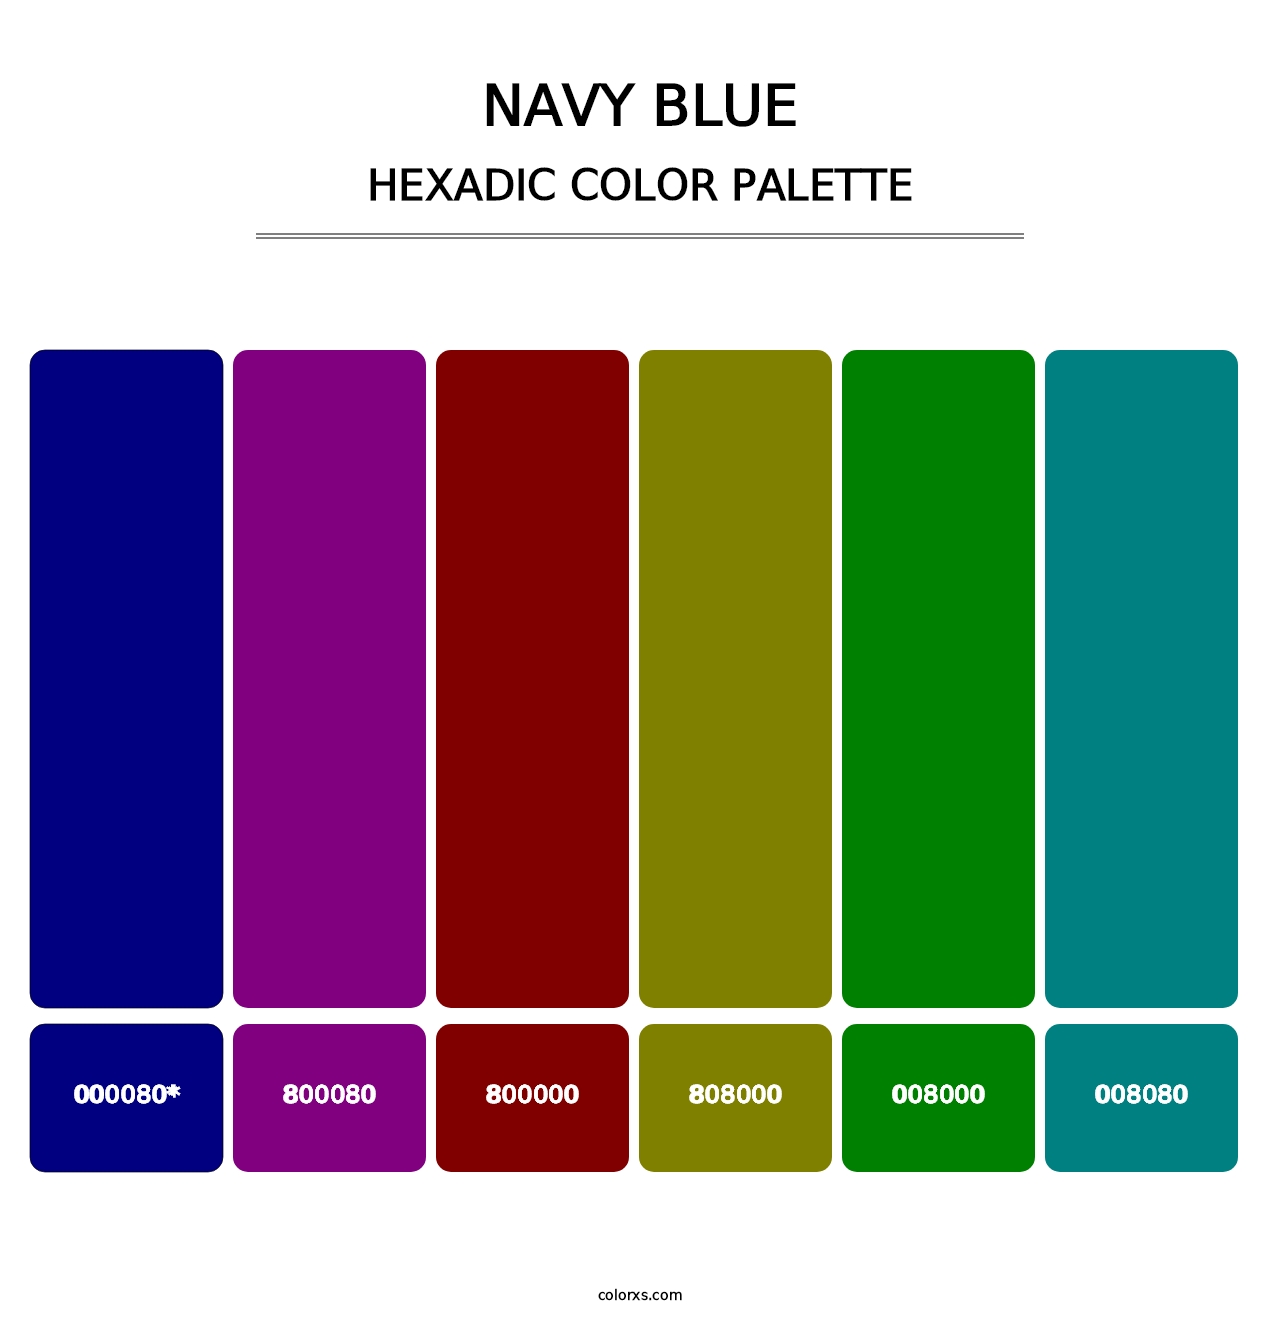 Navy Blue - Hexadic Color Palette